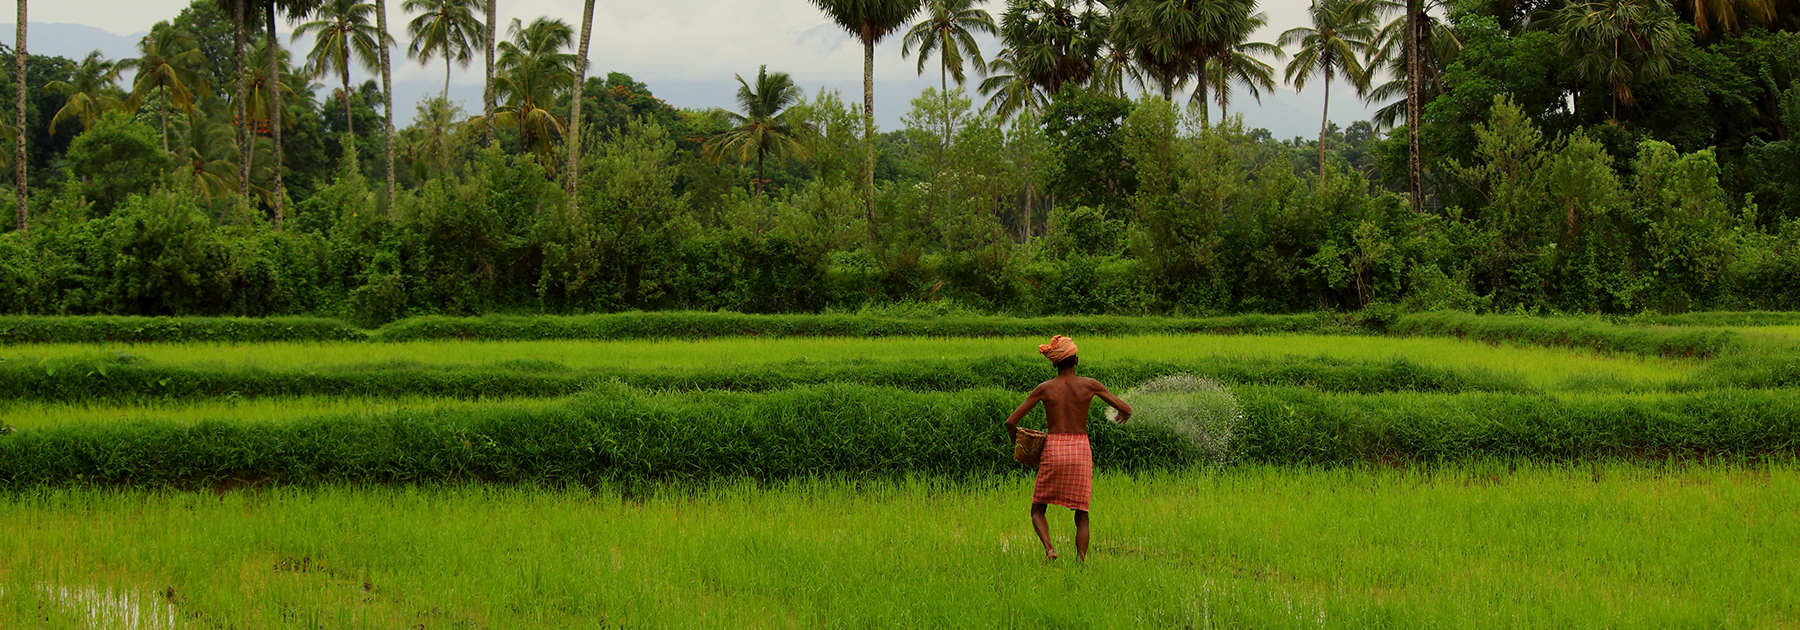 Fertilizing a rice paddy in Kerala.